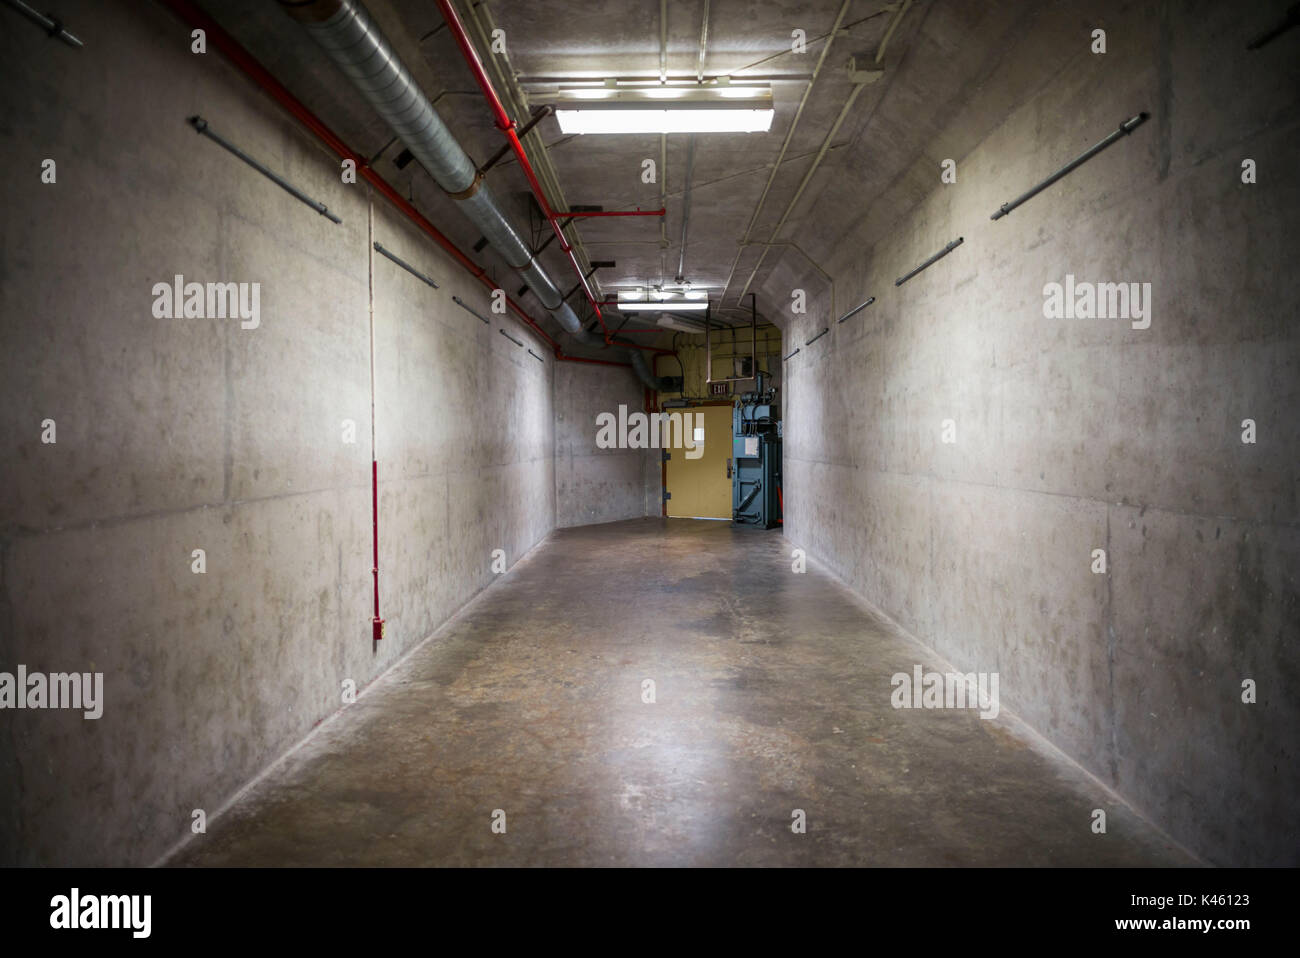 Canada, Ontario, Carp, The Diefenbunker, Canadian Cold War Museum in underground bunker, bunker passageway Stock Photo